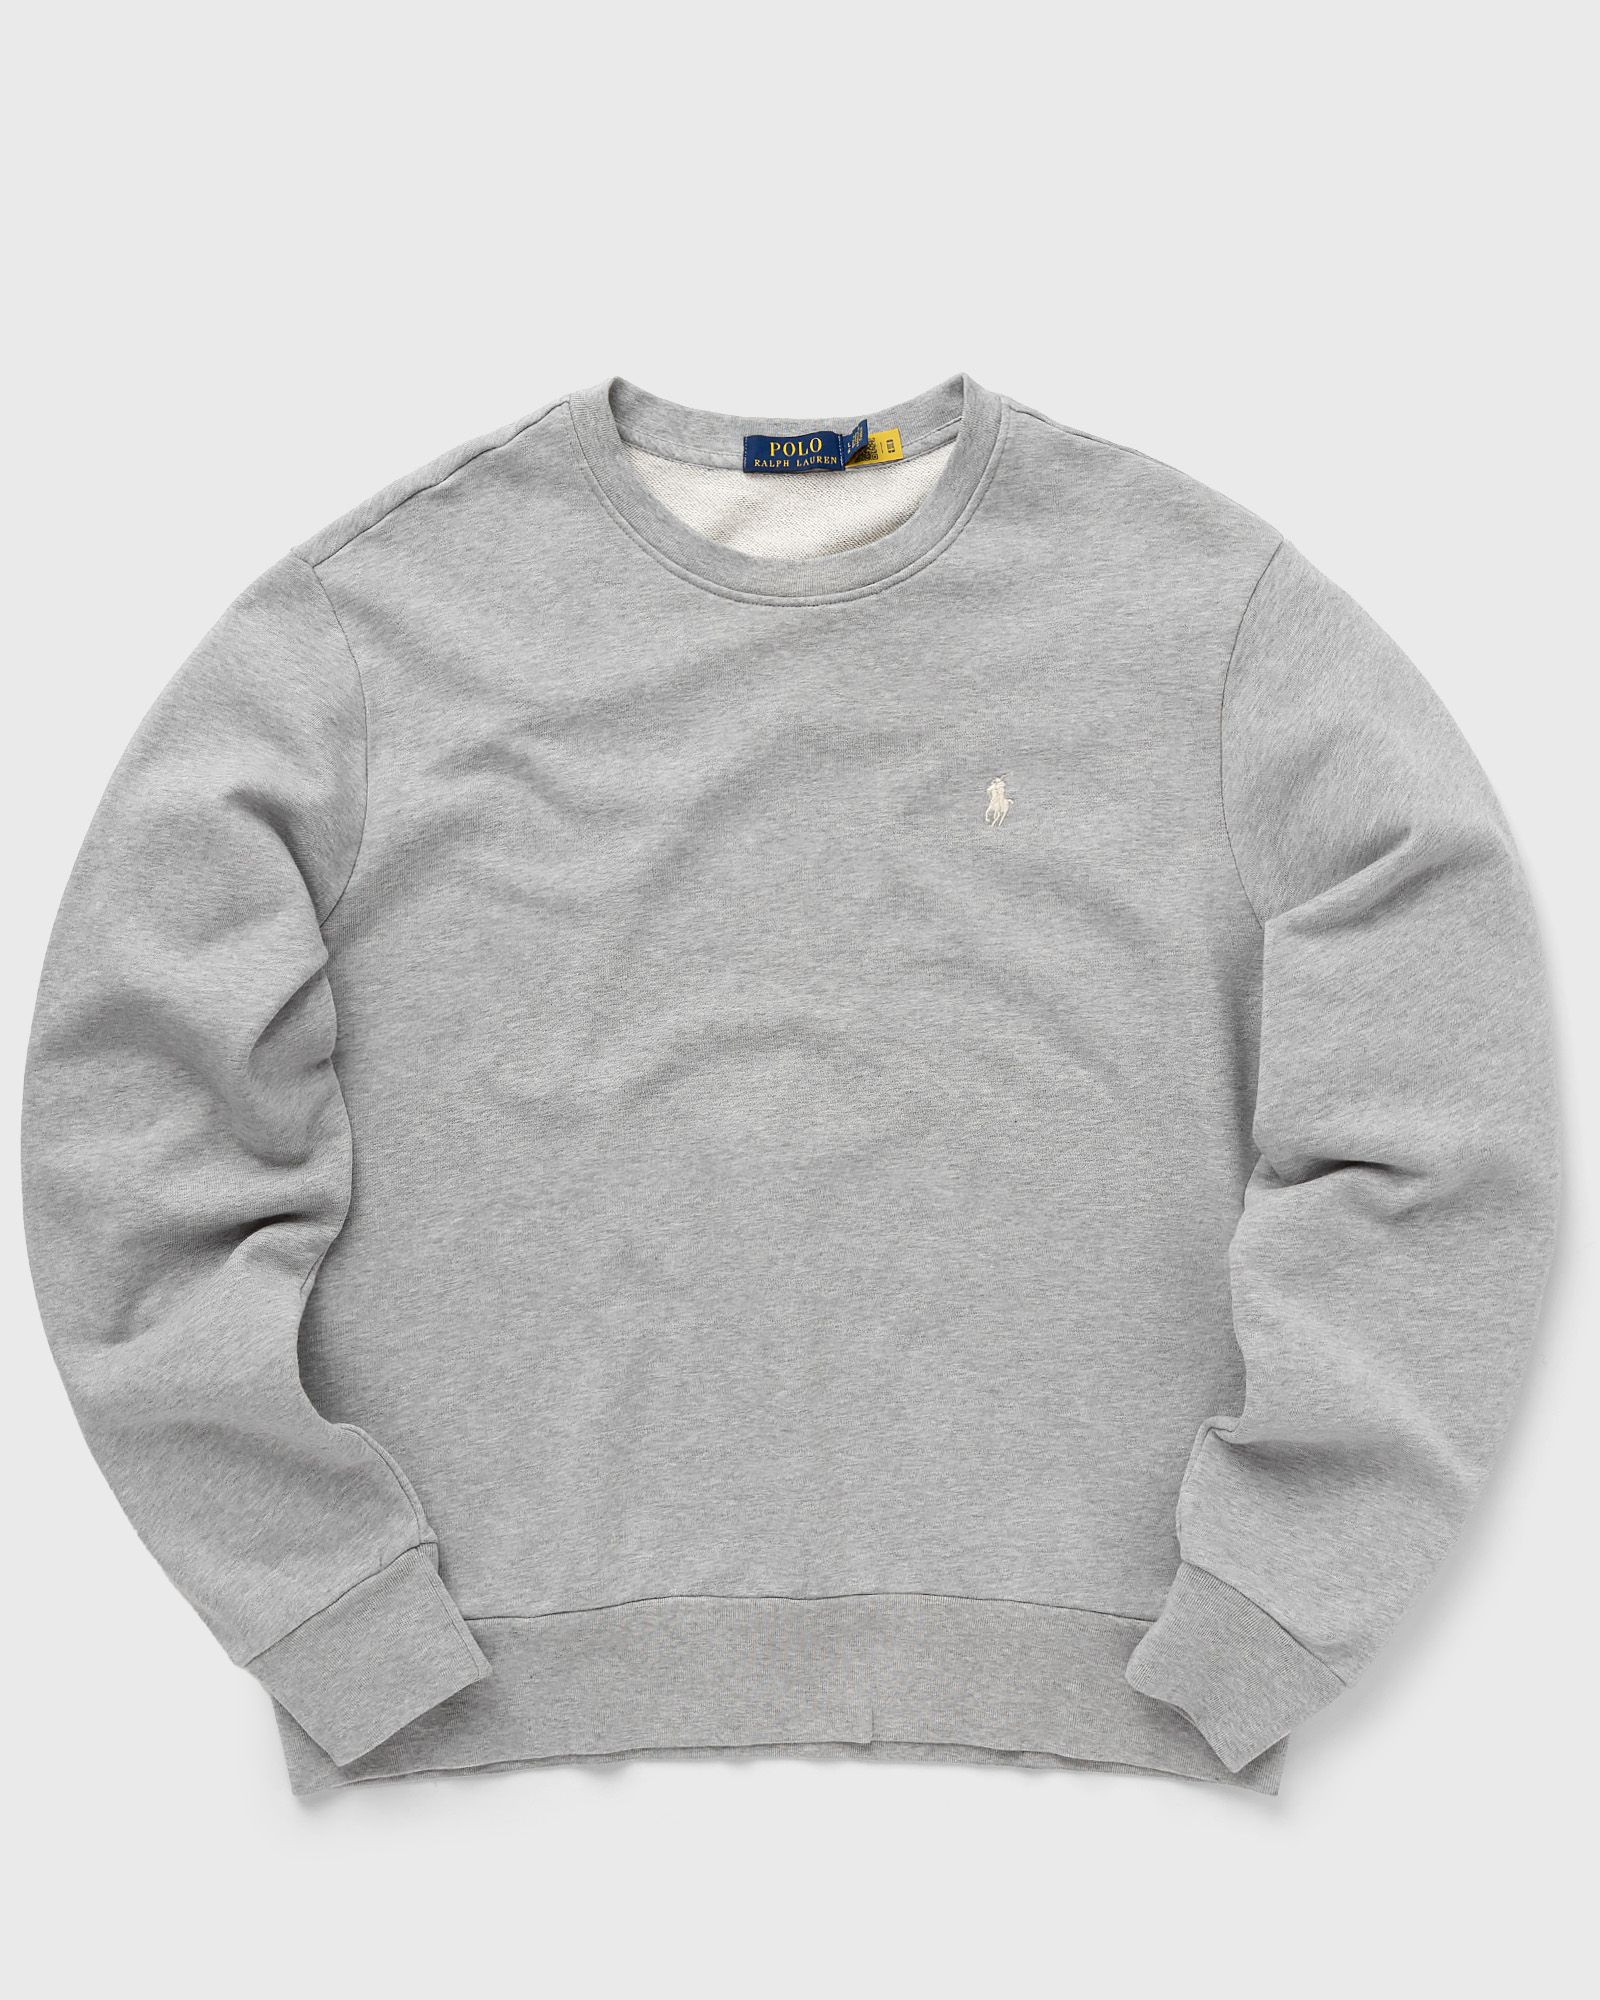 Polo Ralph Lauren - long sleeve-sweatshirt men sweatshirts grey in größe:xl